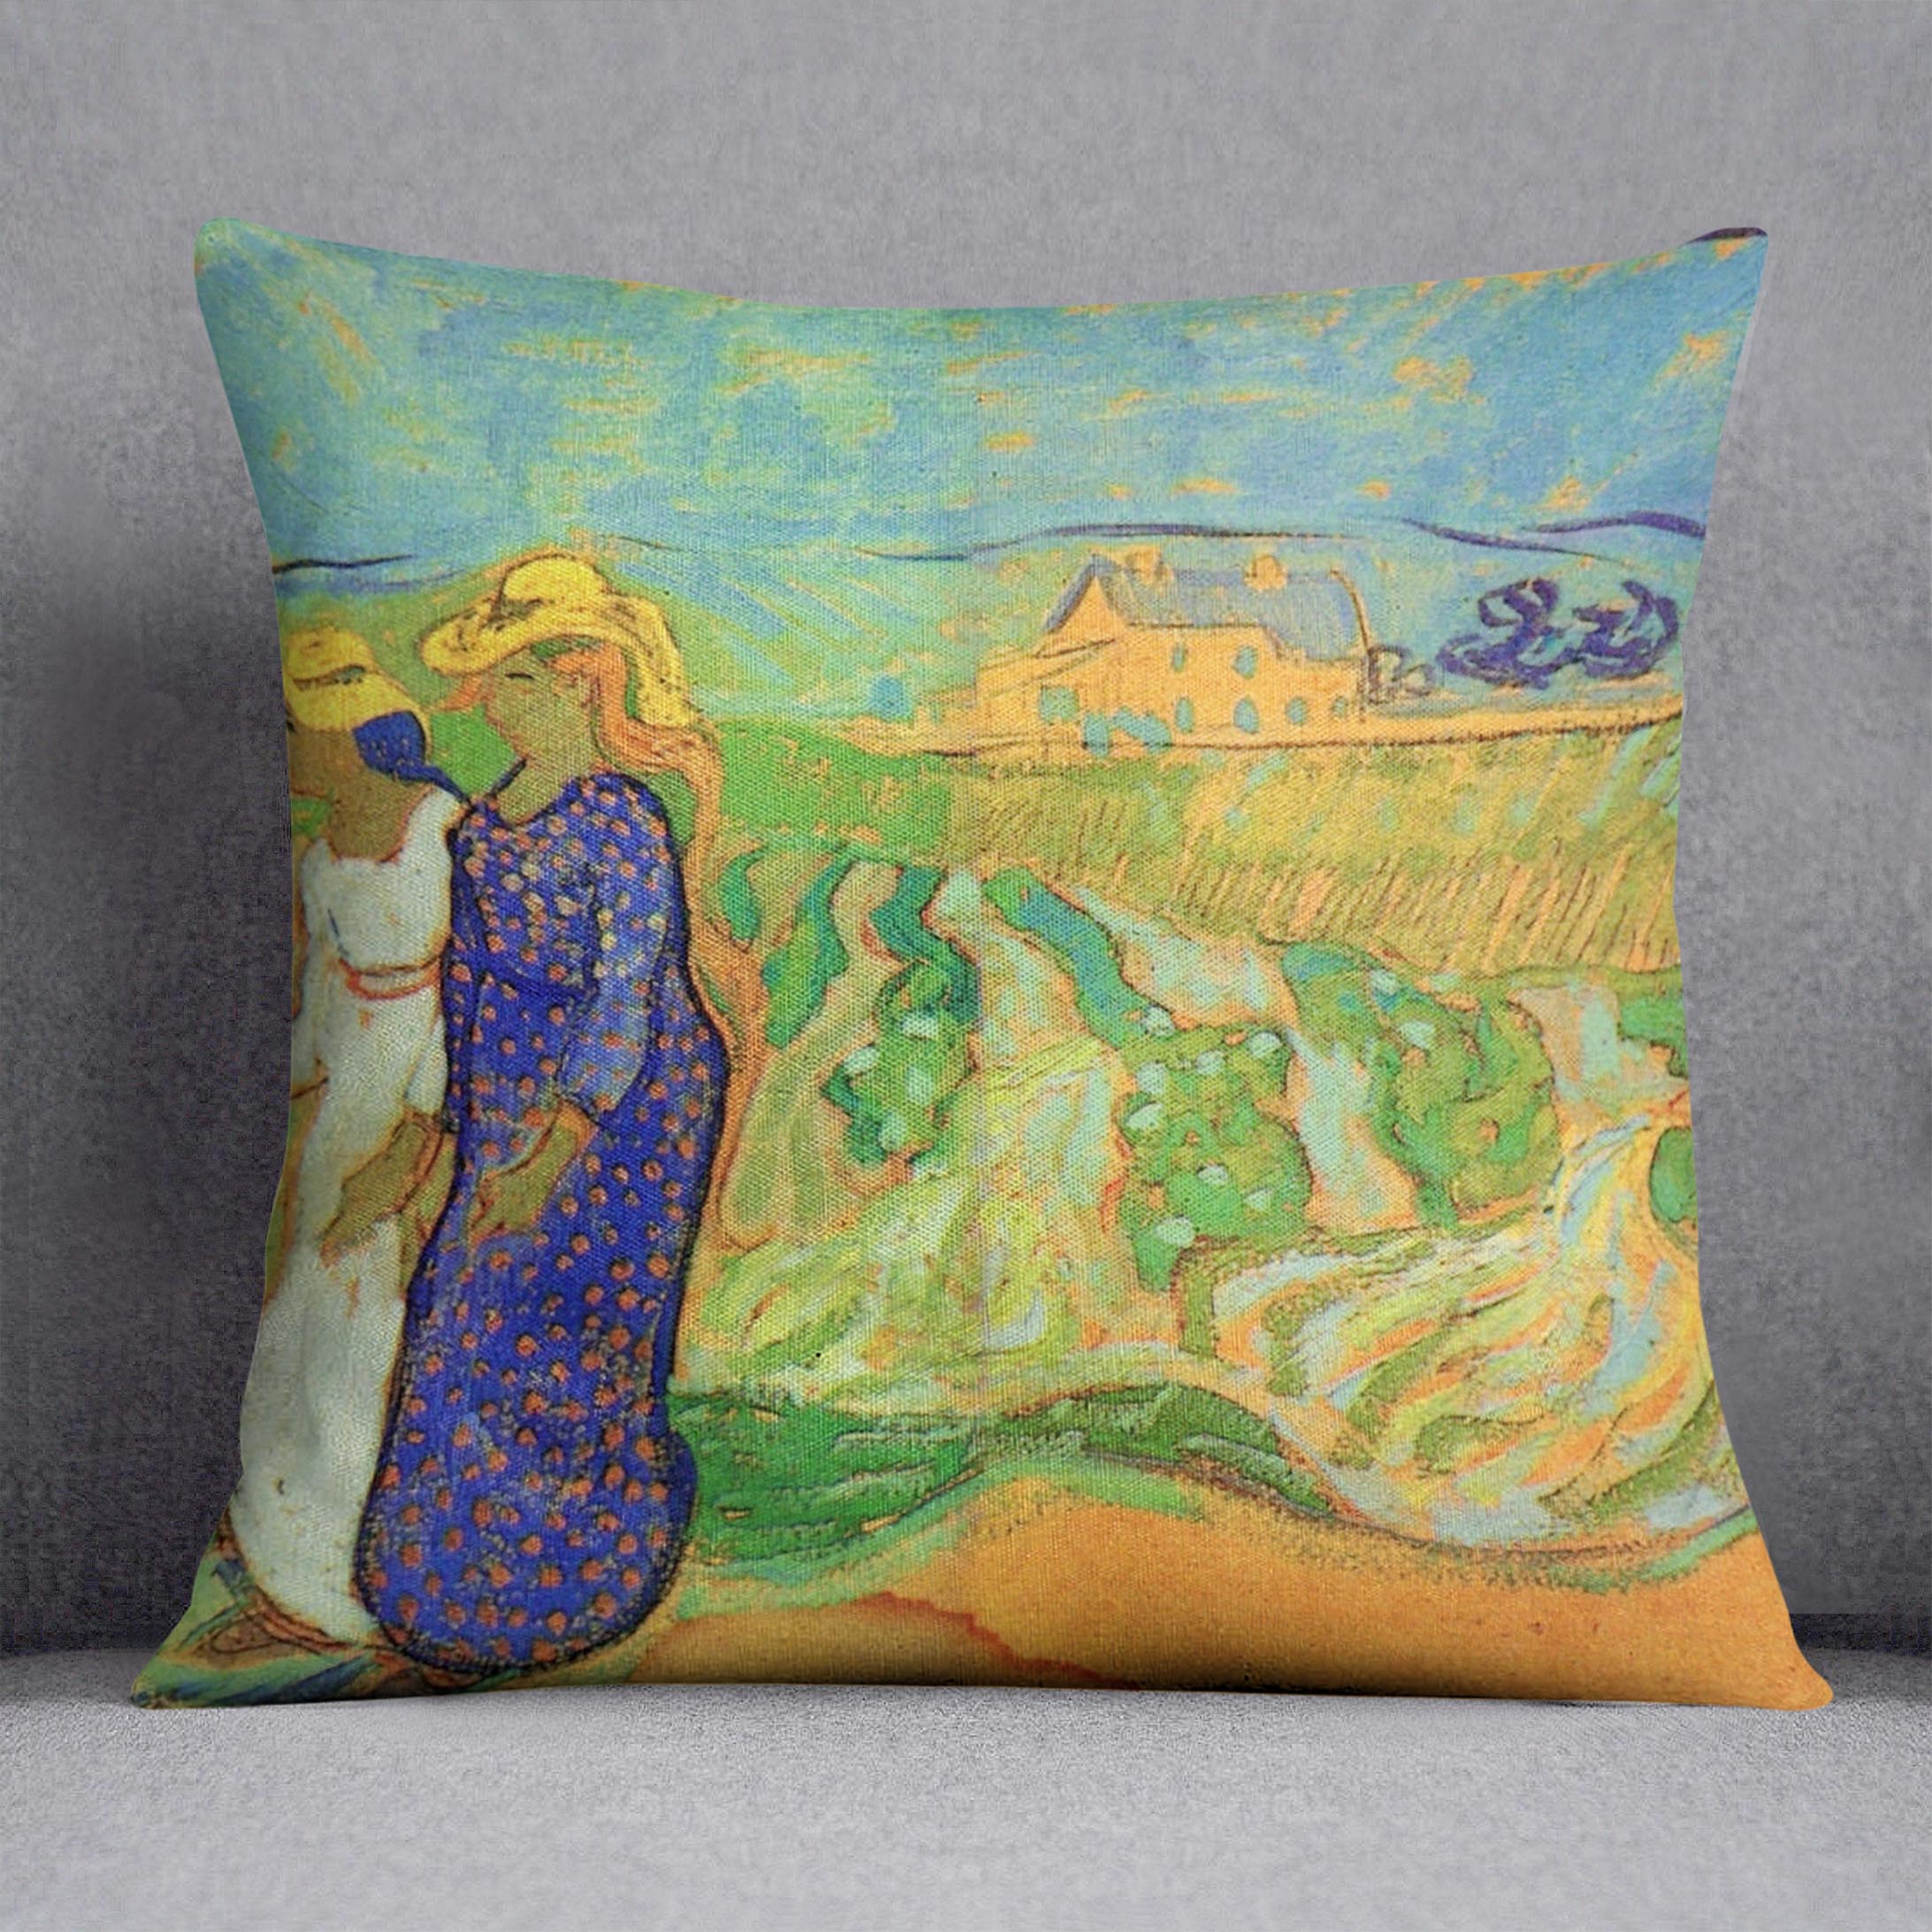 Two Women Crossing the Fields by Van Gogh Cushion